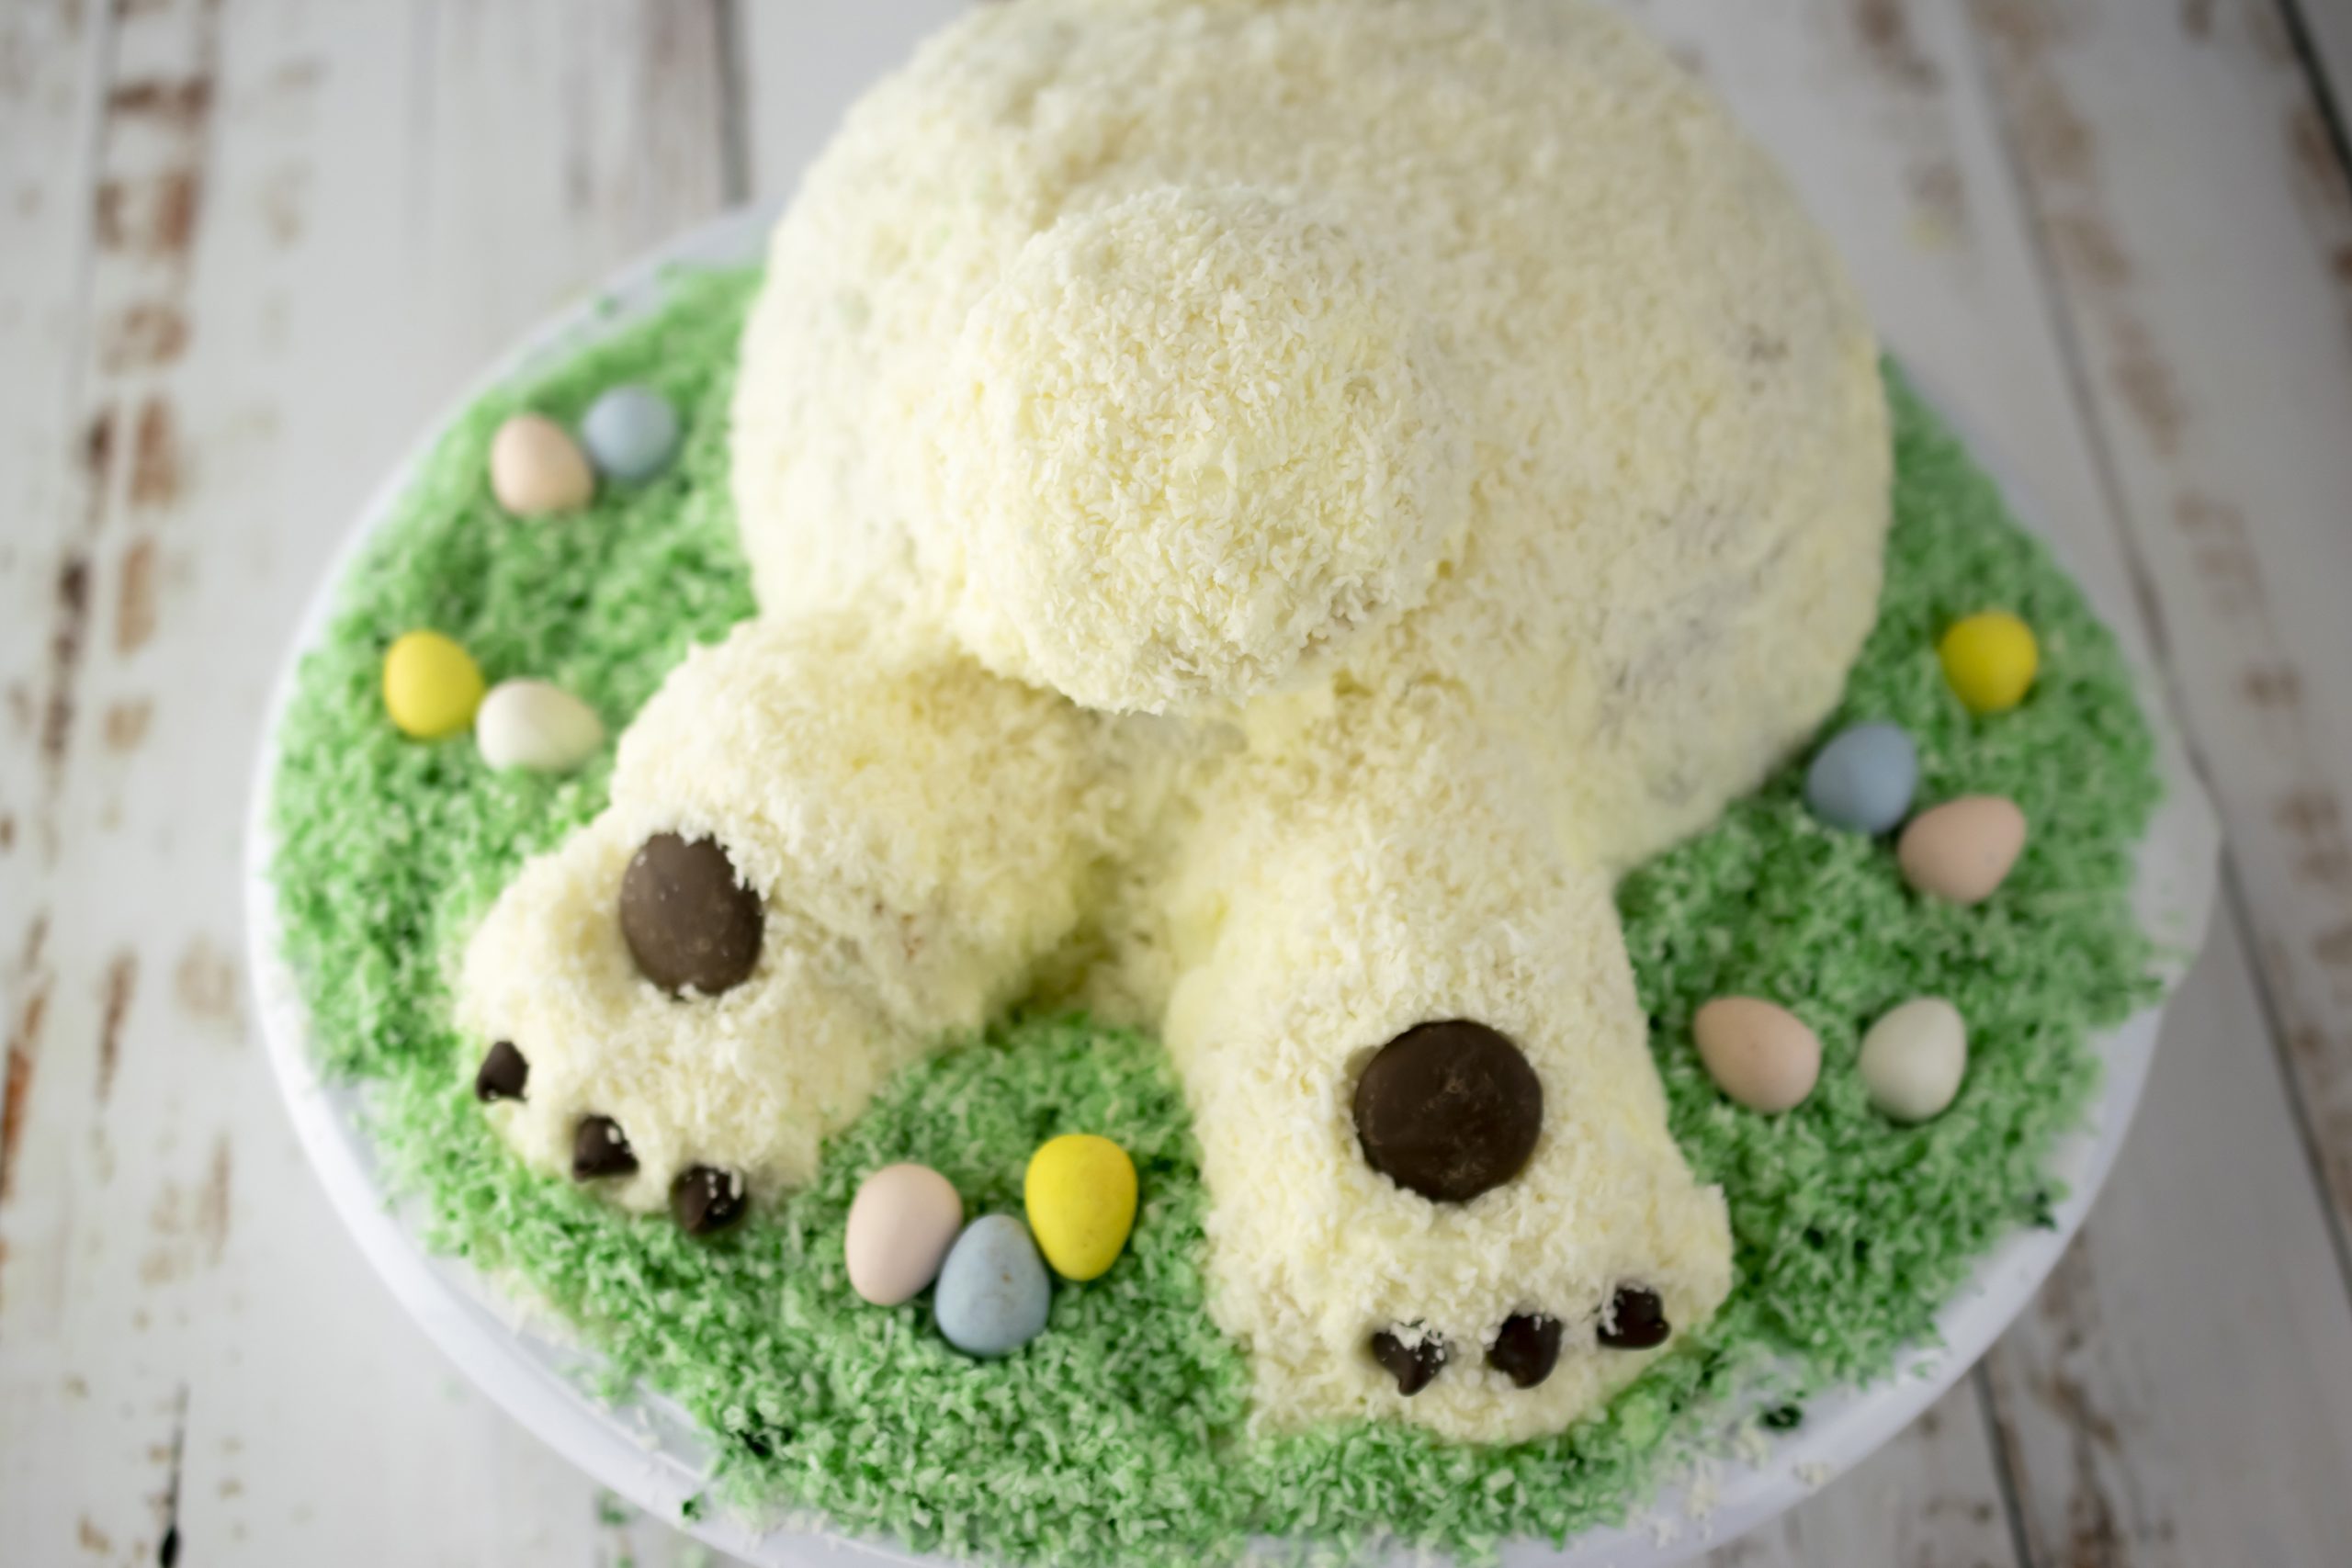 Hoppy Easter cake. Recipe courtesy of Culinary.net